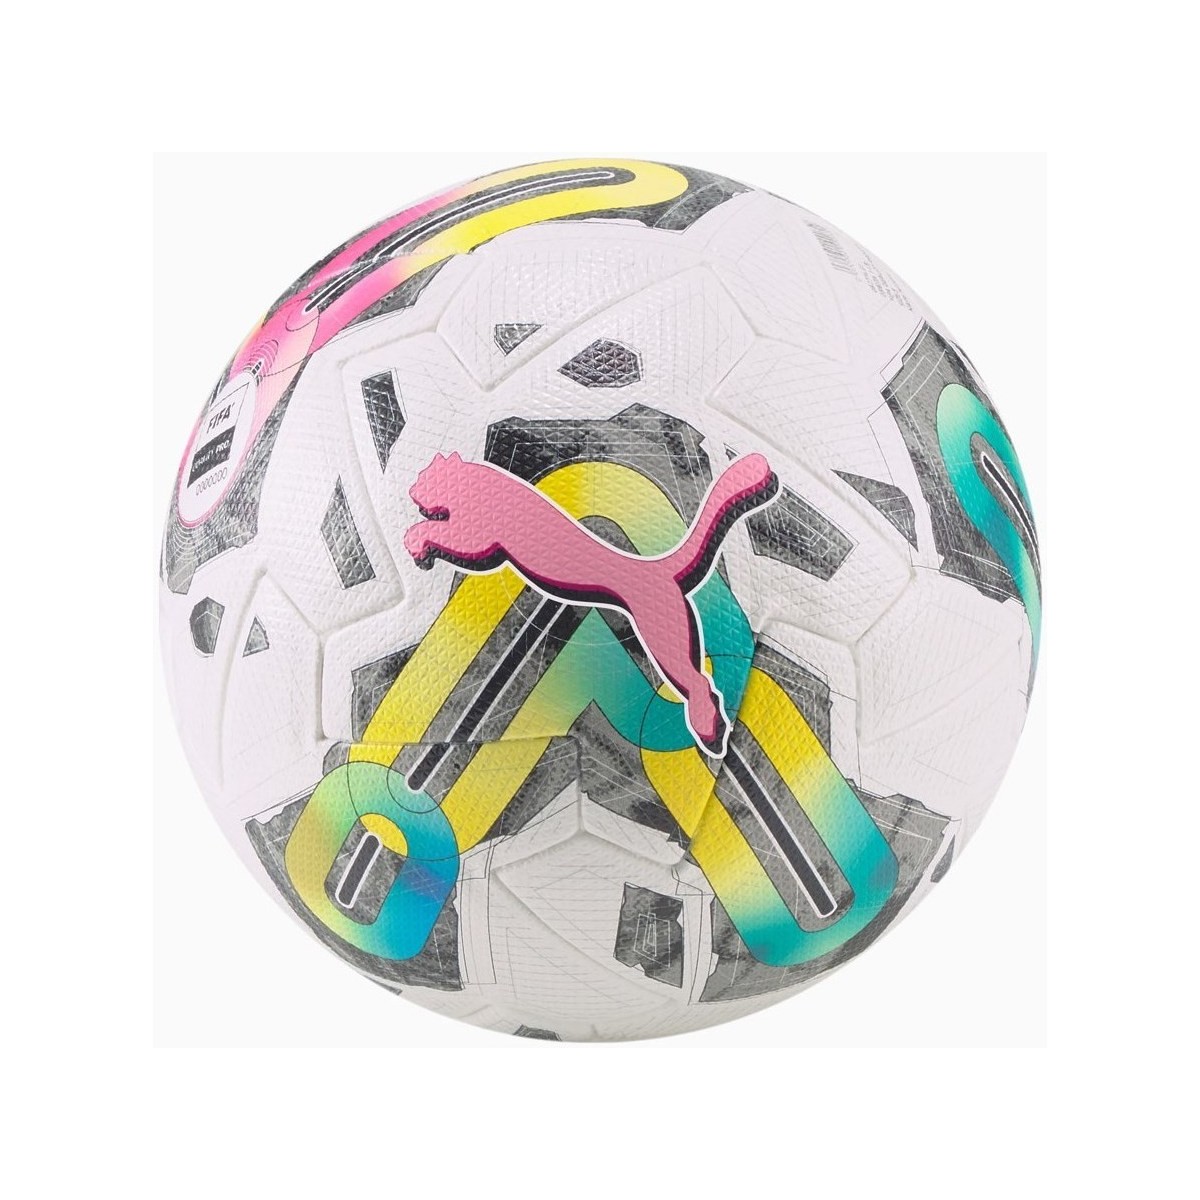 Accessoires Ballons de sport Puma Orbita 1 TB Fifa Quality Pro Blanc